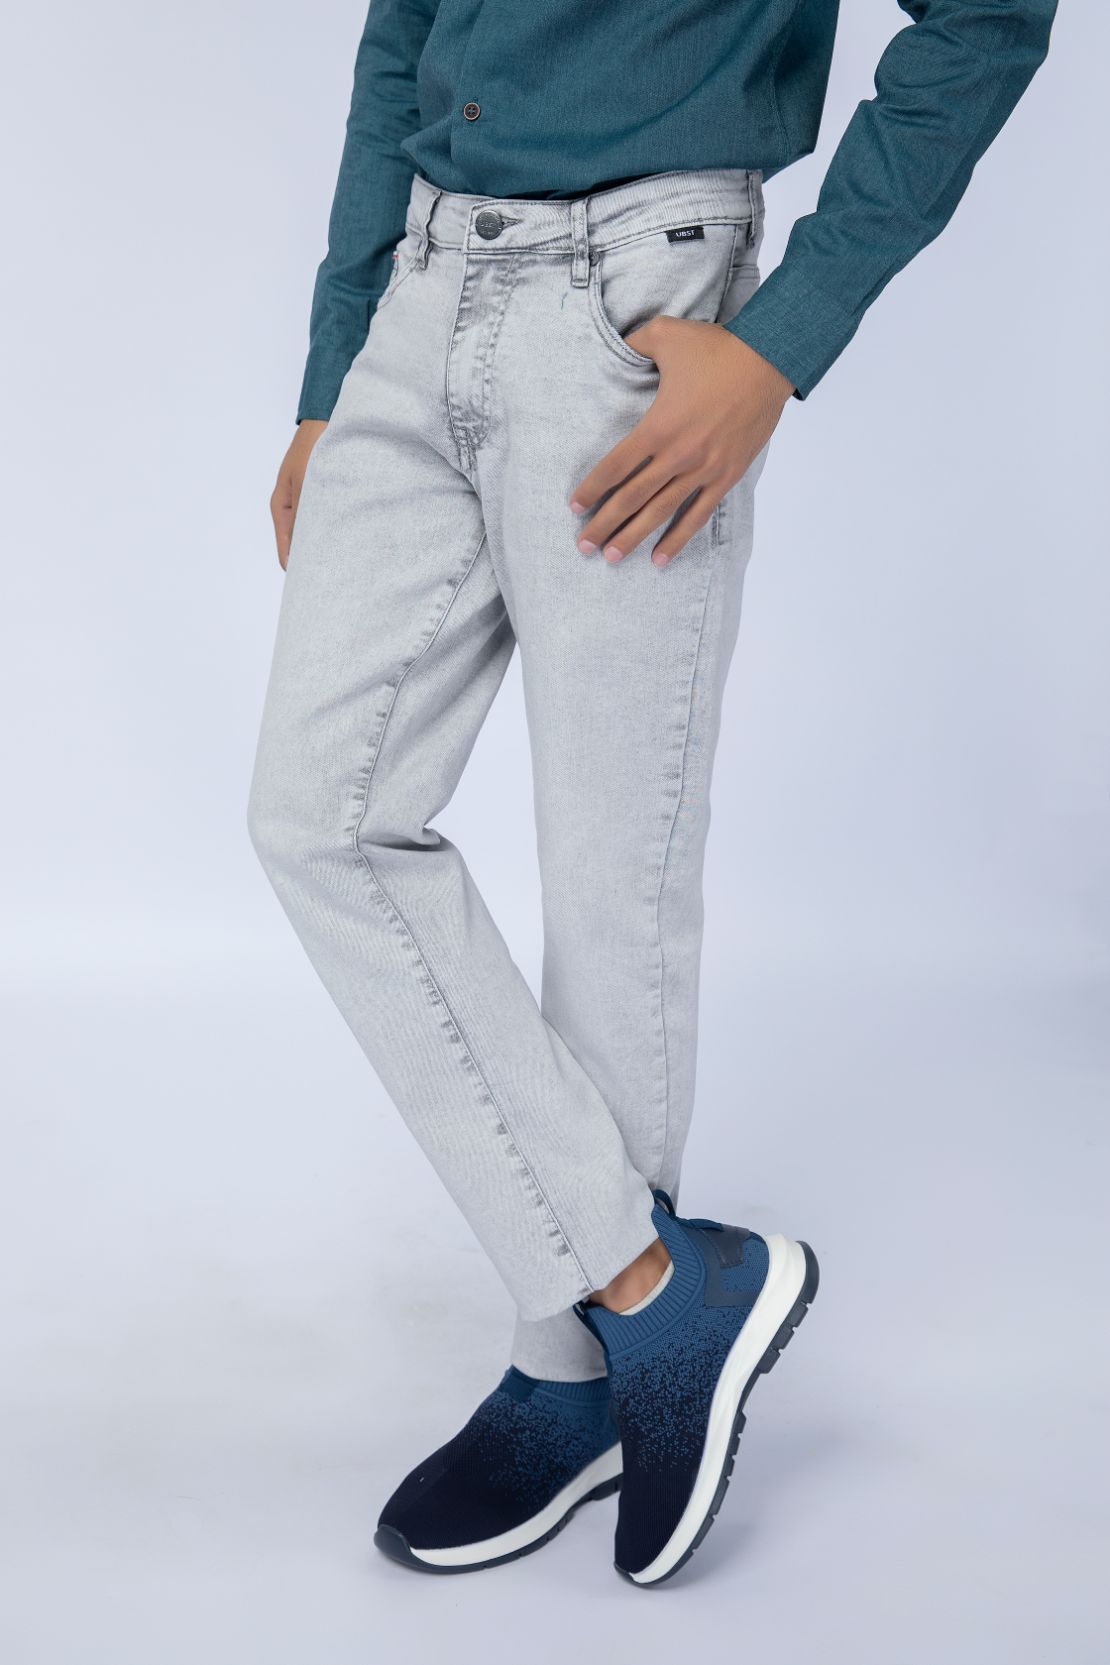 L Grey Jeans